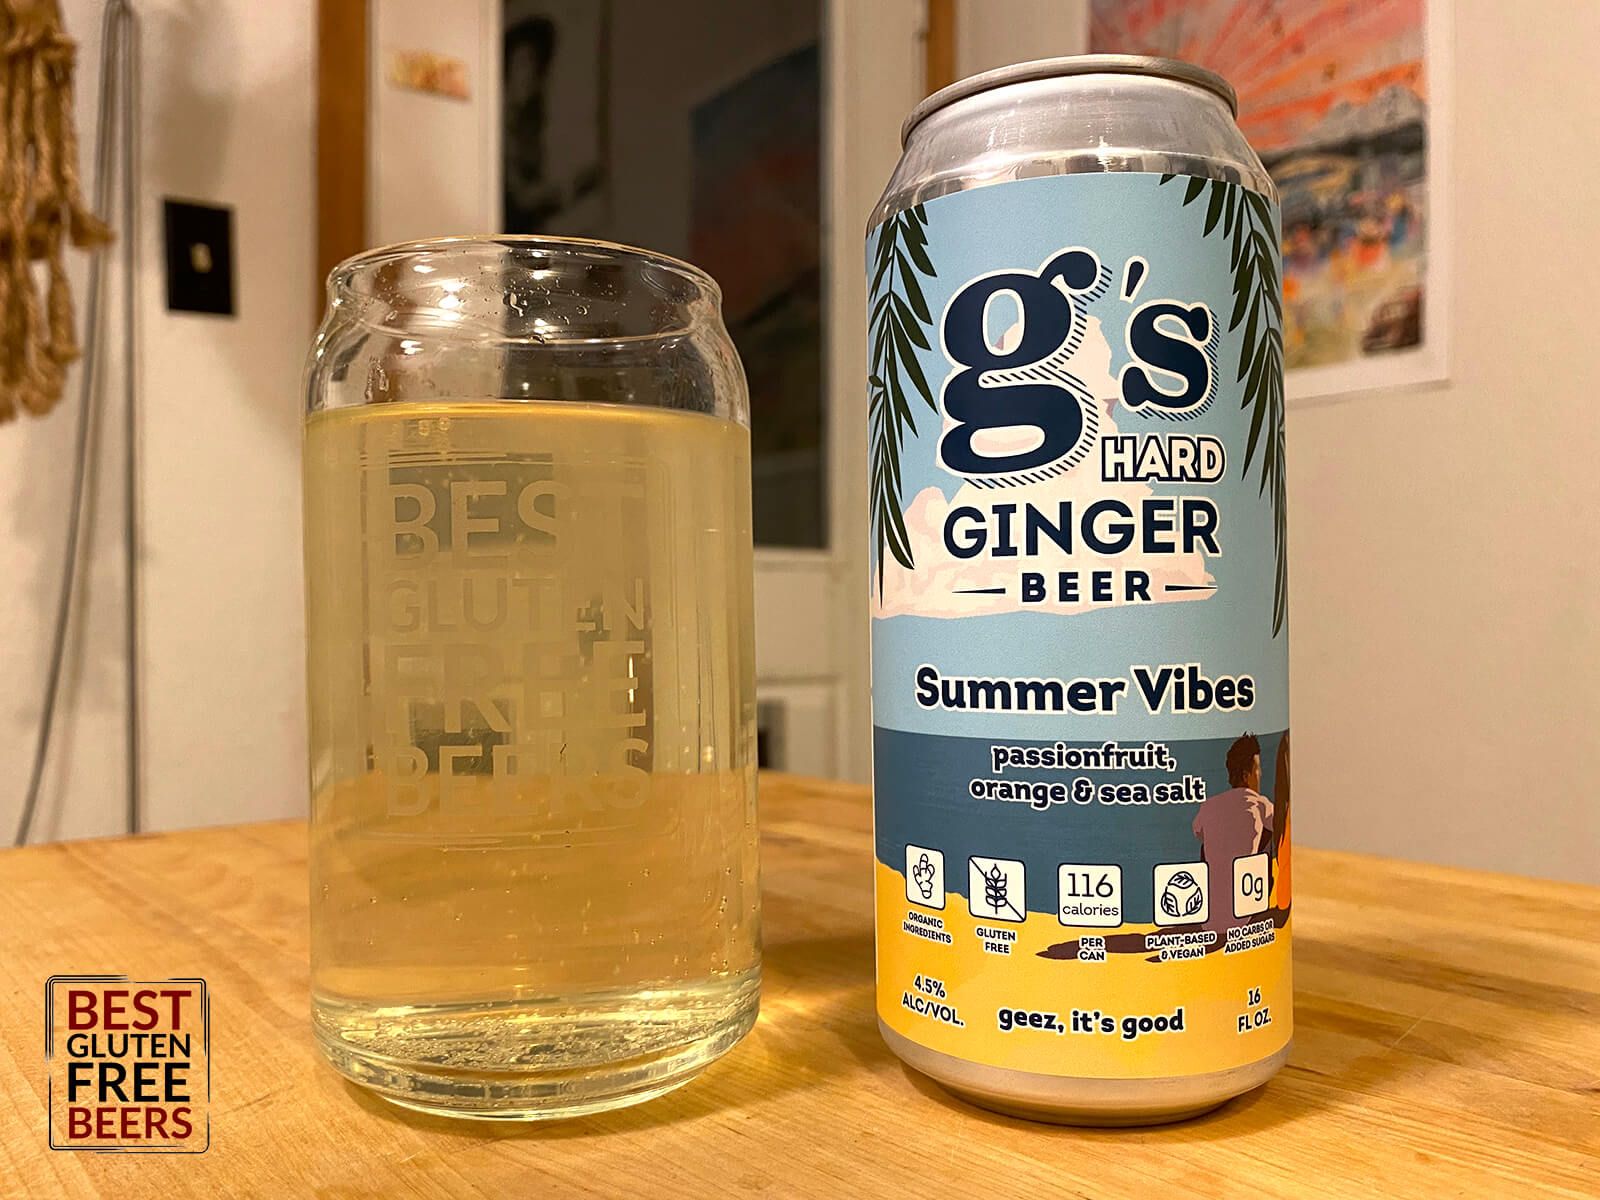 G's Hard Ginger Beer Summer Vibes